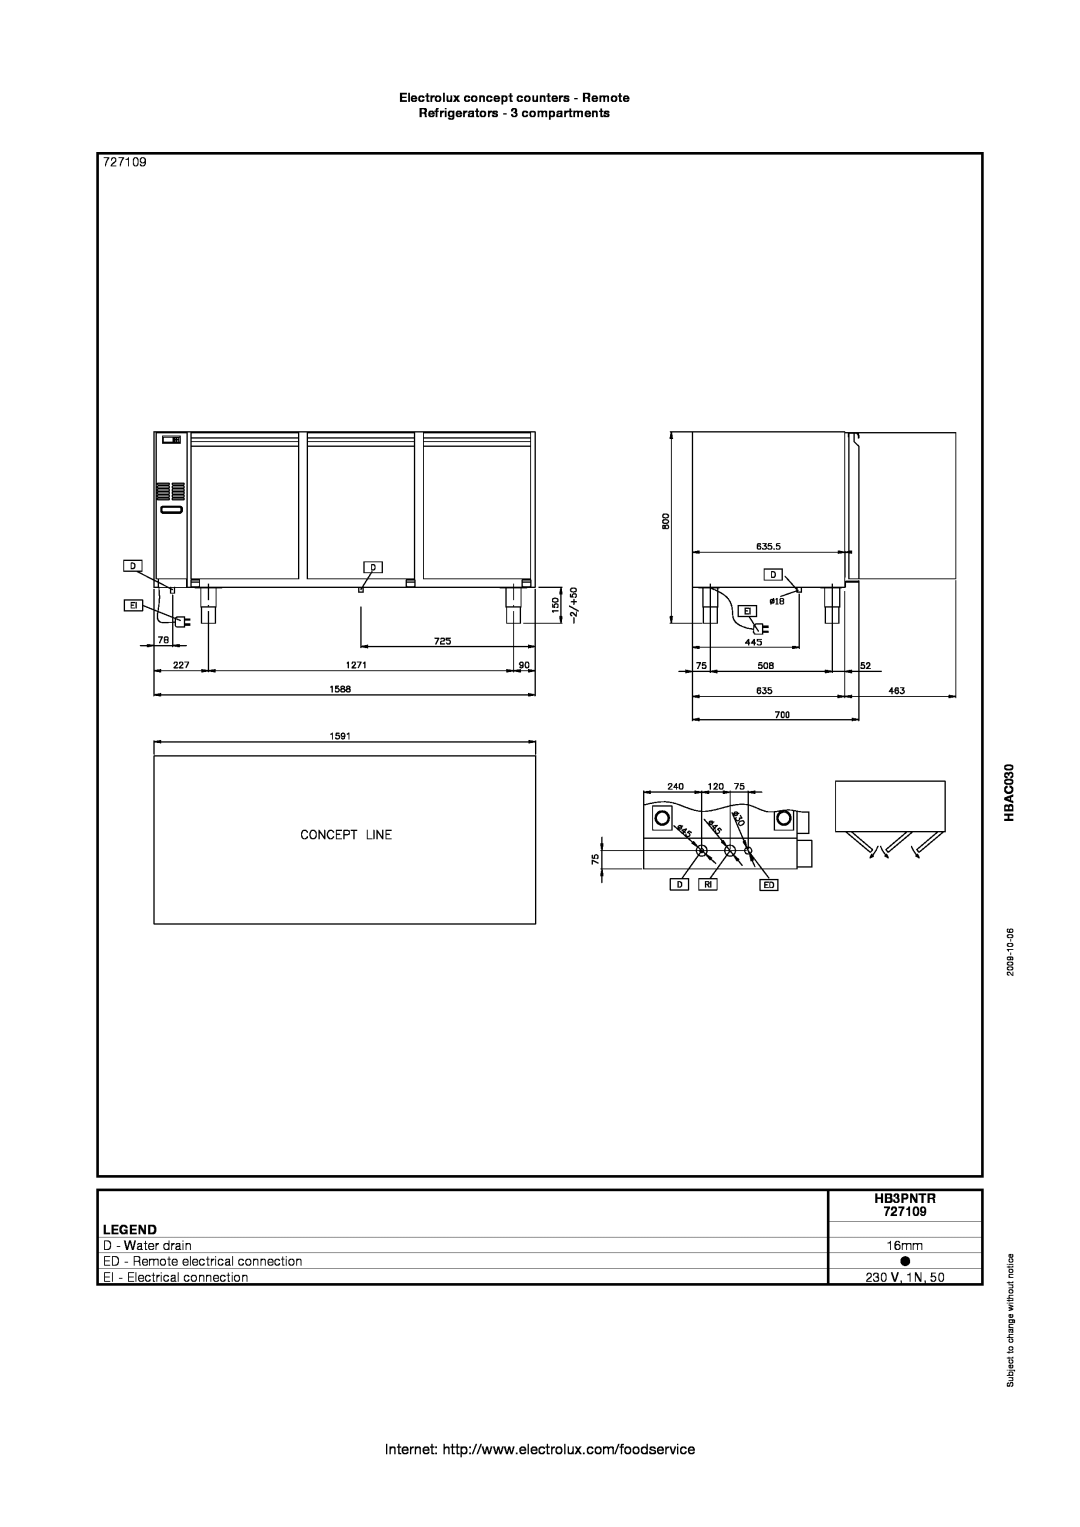 Electrolux 727109, HB3PR Electrolux concept counters - Remote Refrigerators - 3 compartments, HBAC030, HB3PNTR, 2009-10-06 